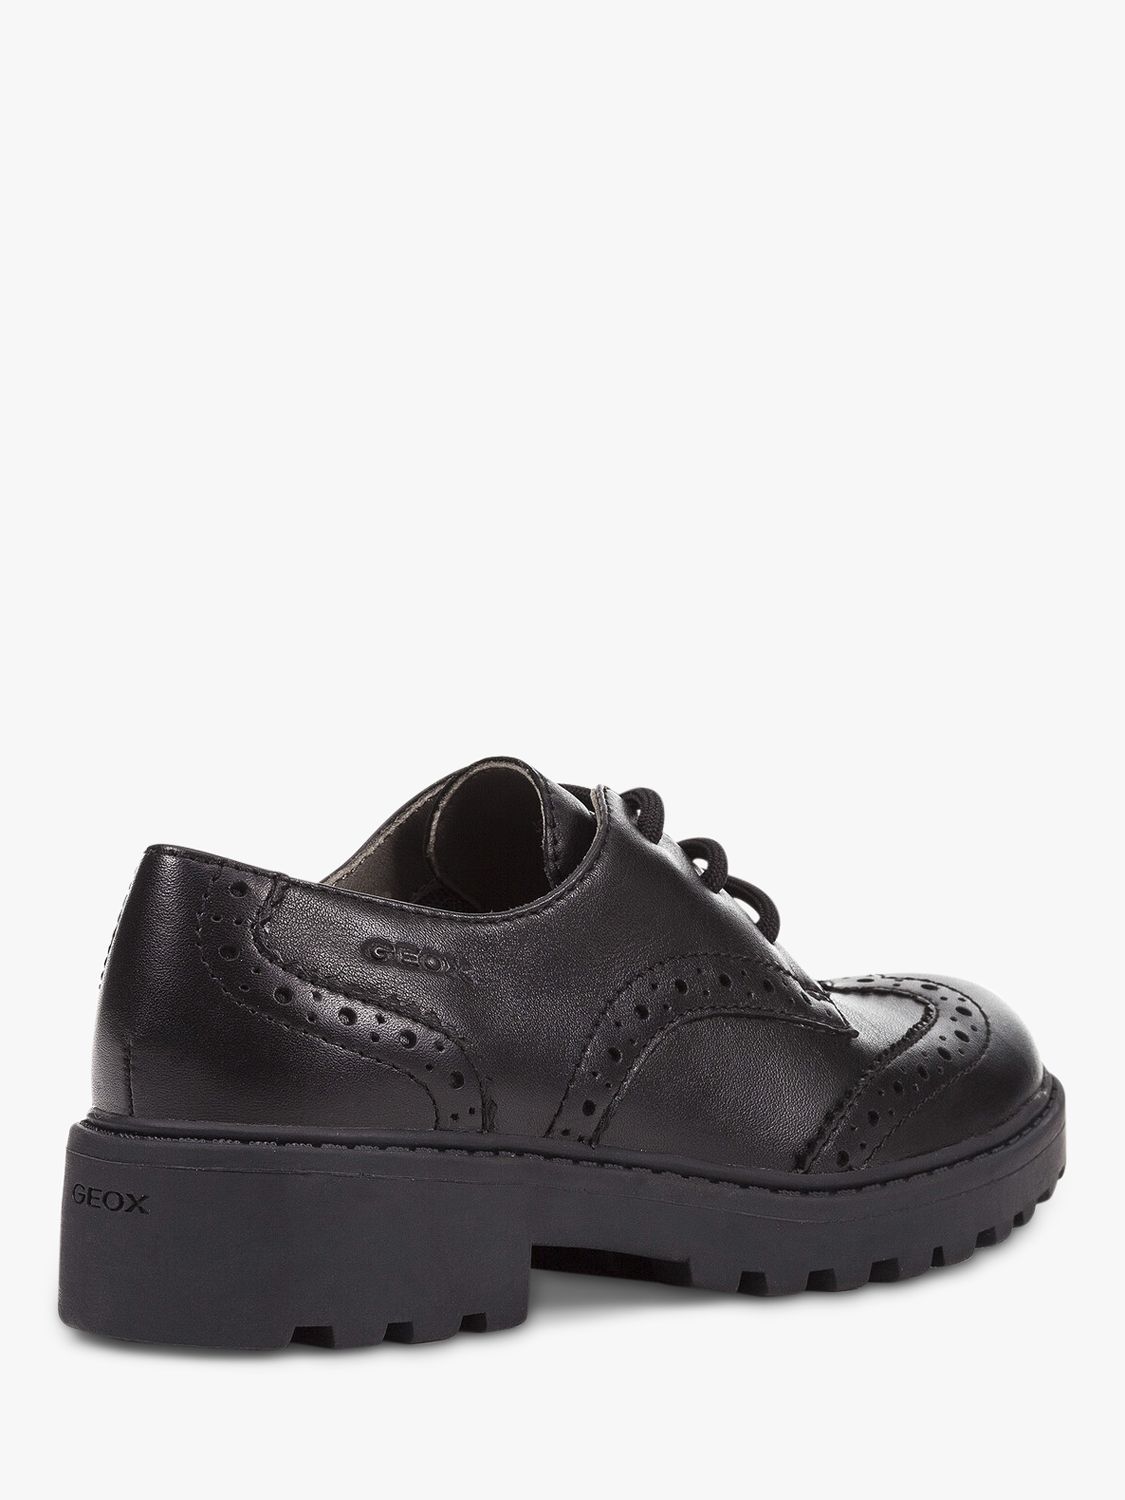 Geox Kids' Casey Lace Up Brogue School Shoes, Black, 28